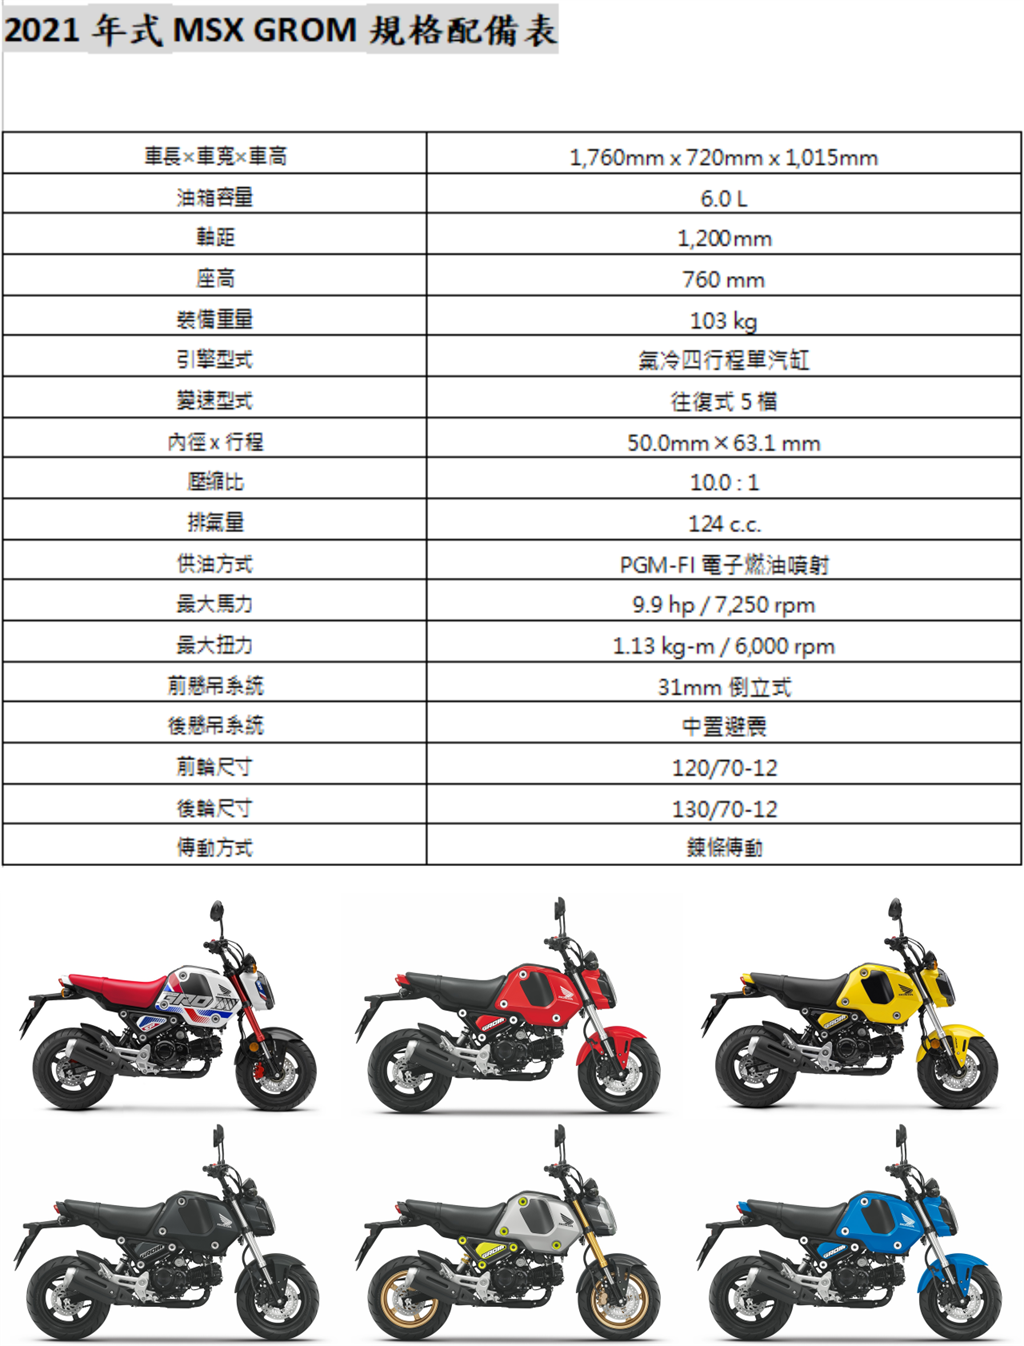 Honda Motorcycle 2021 Honda二輪全車系正式售價發表 暨 MSX GROM全新進化 樂趣登場
